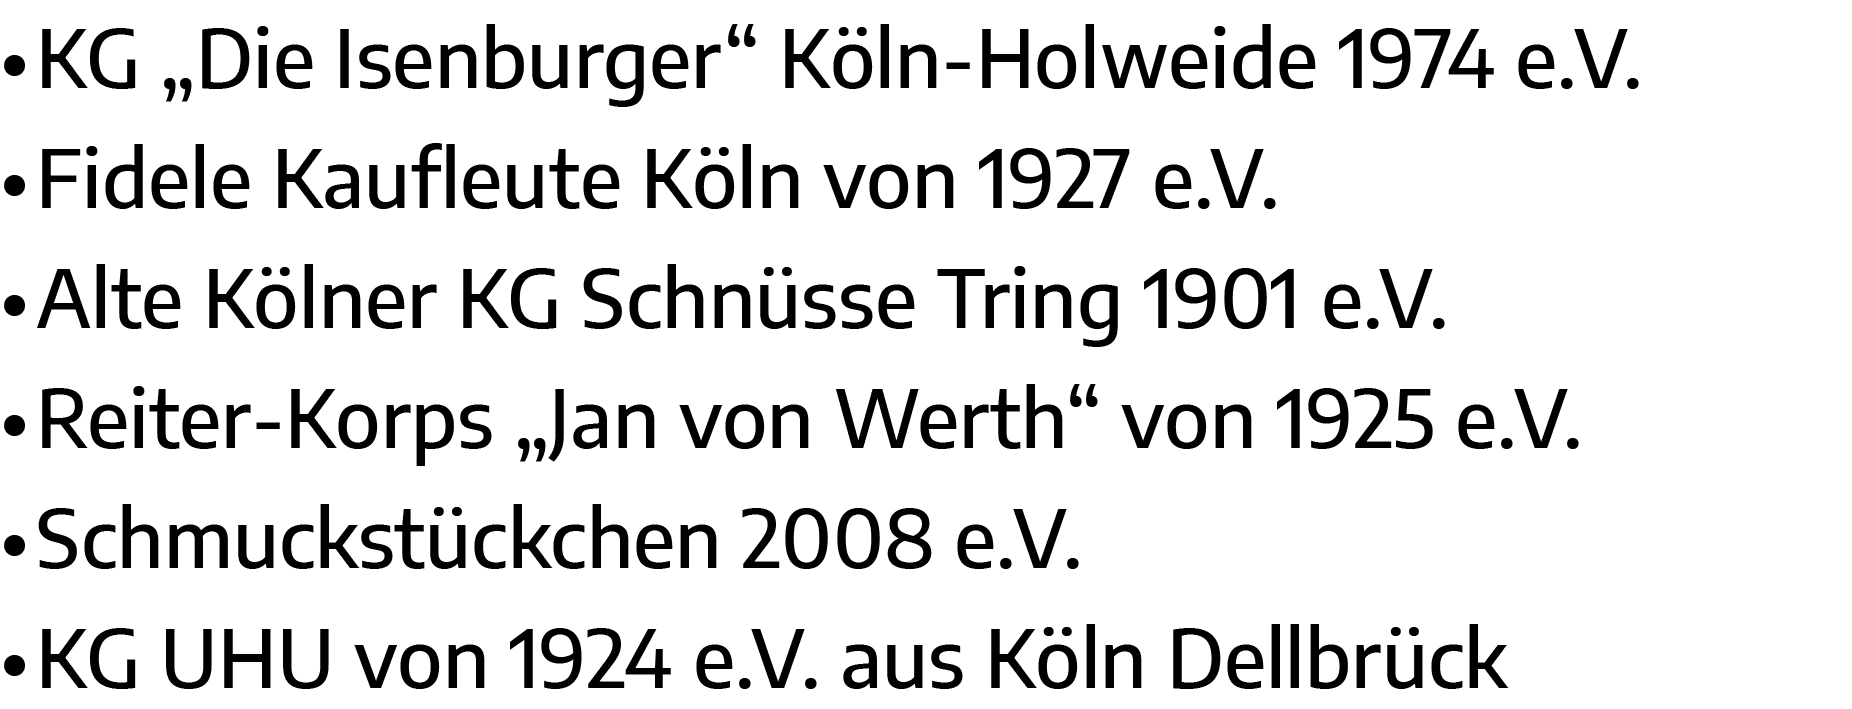   KG  Die Isenburger  Köln-Holweide 1974 e V    Fidele Kaufleute Köln von 1927 e V    Alte Kölner KG Schnüsse Tring 1   